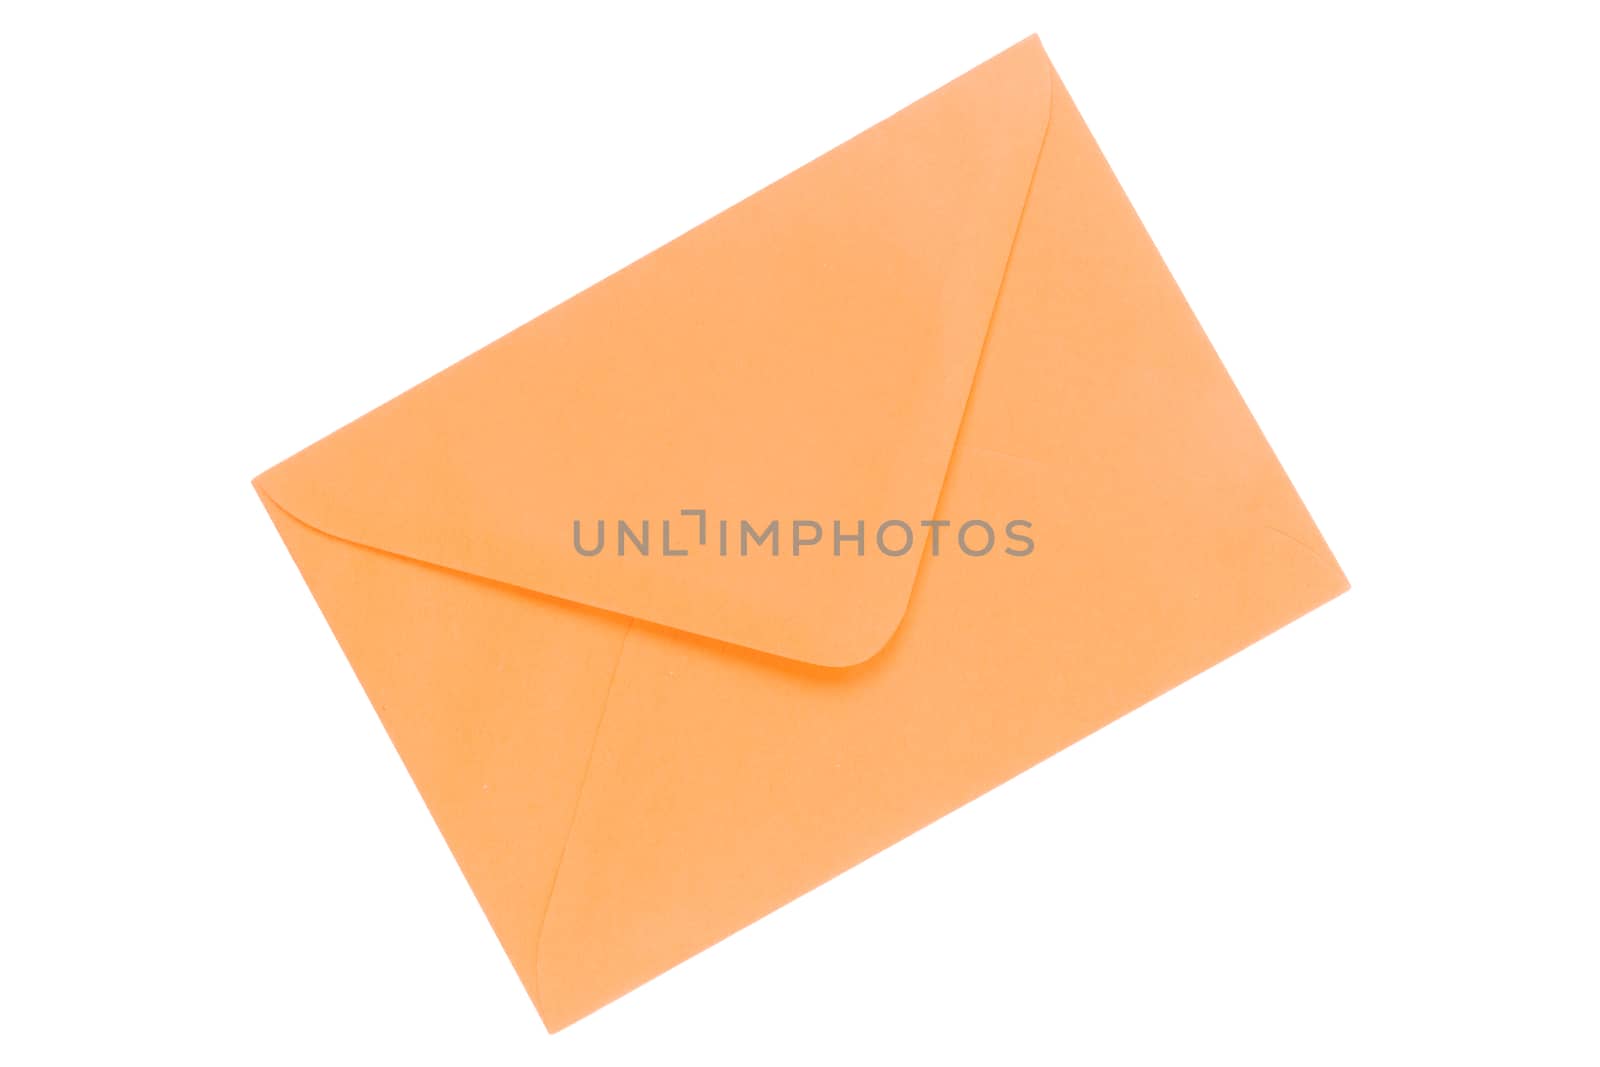 Orange envelope on a white background by neryx